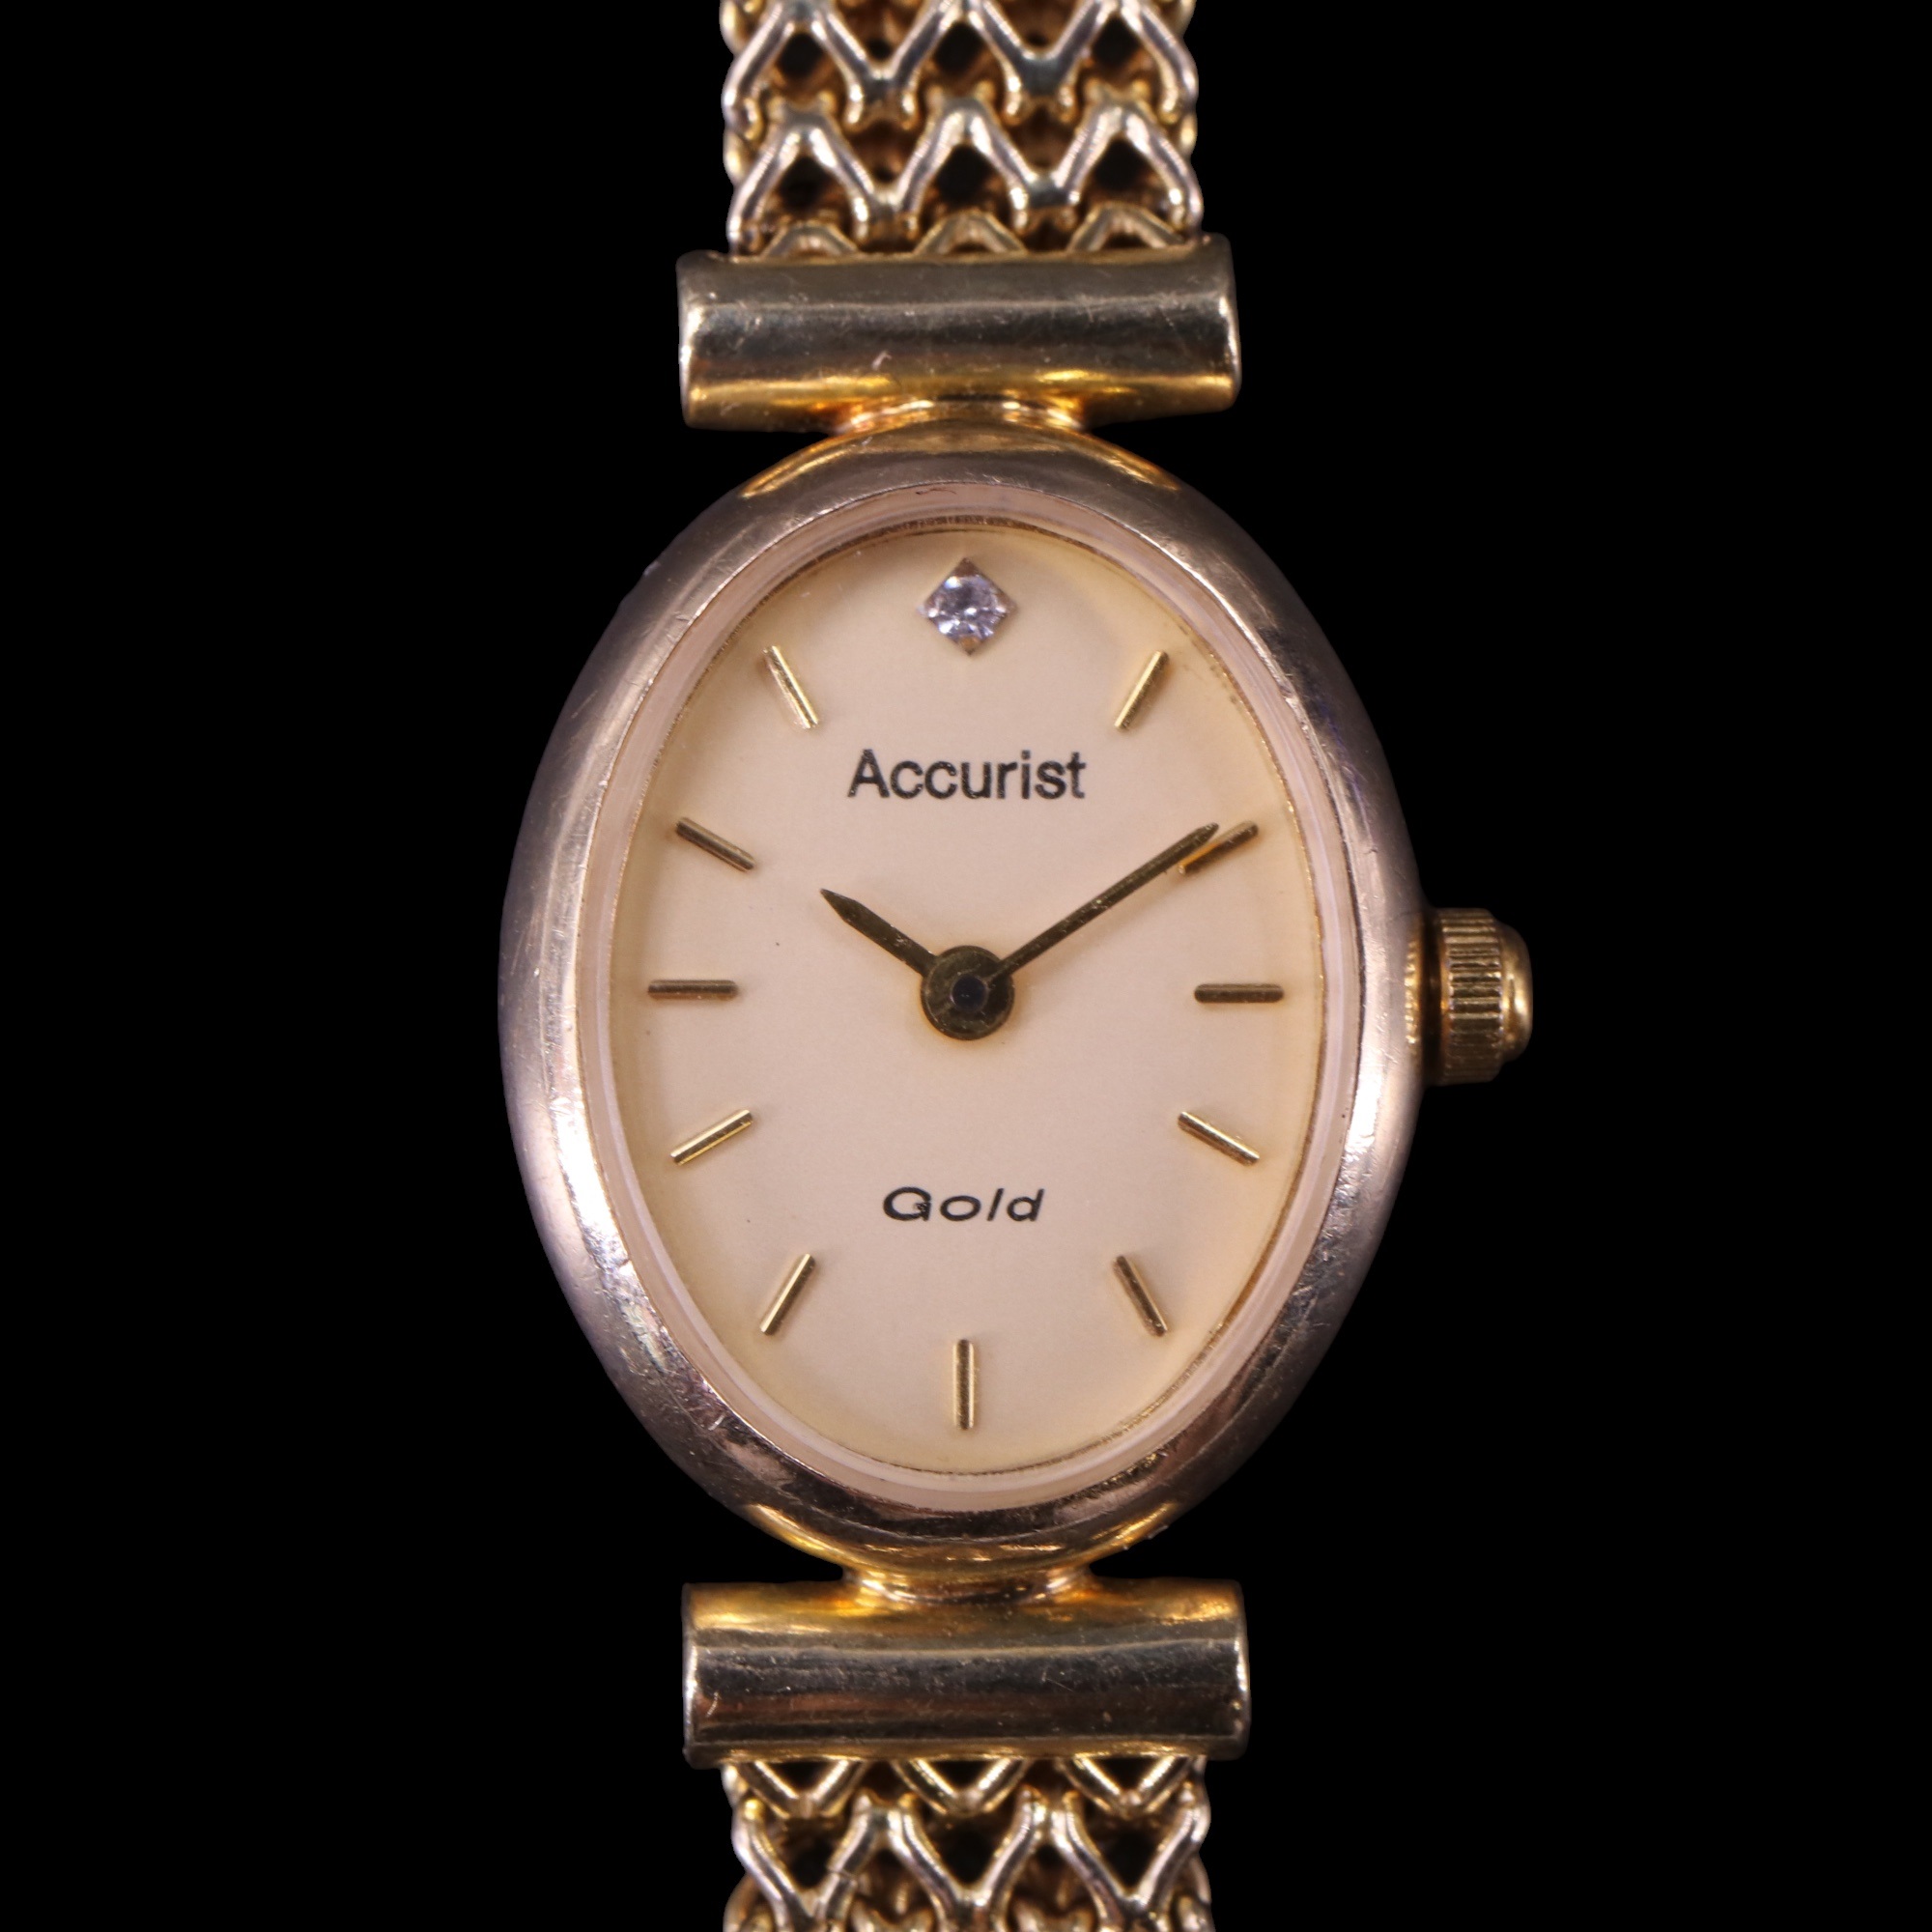 A lady's 2004 Accurist "Gold" 9 ct gold dress wristwatch, having a quartz movement and oval face set